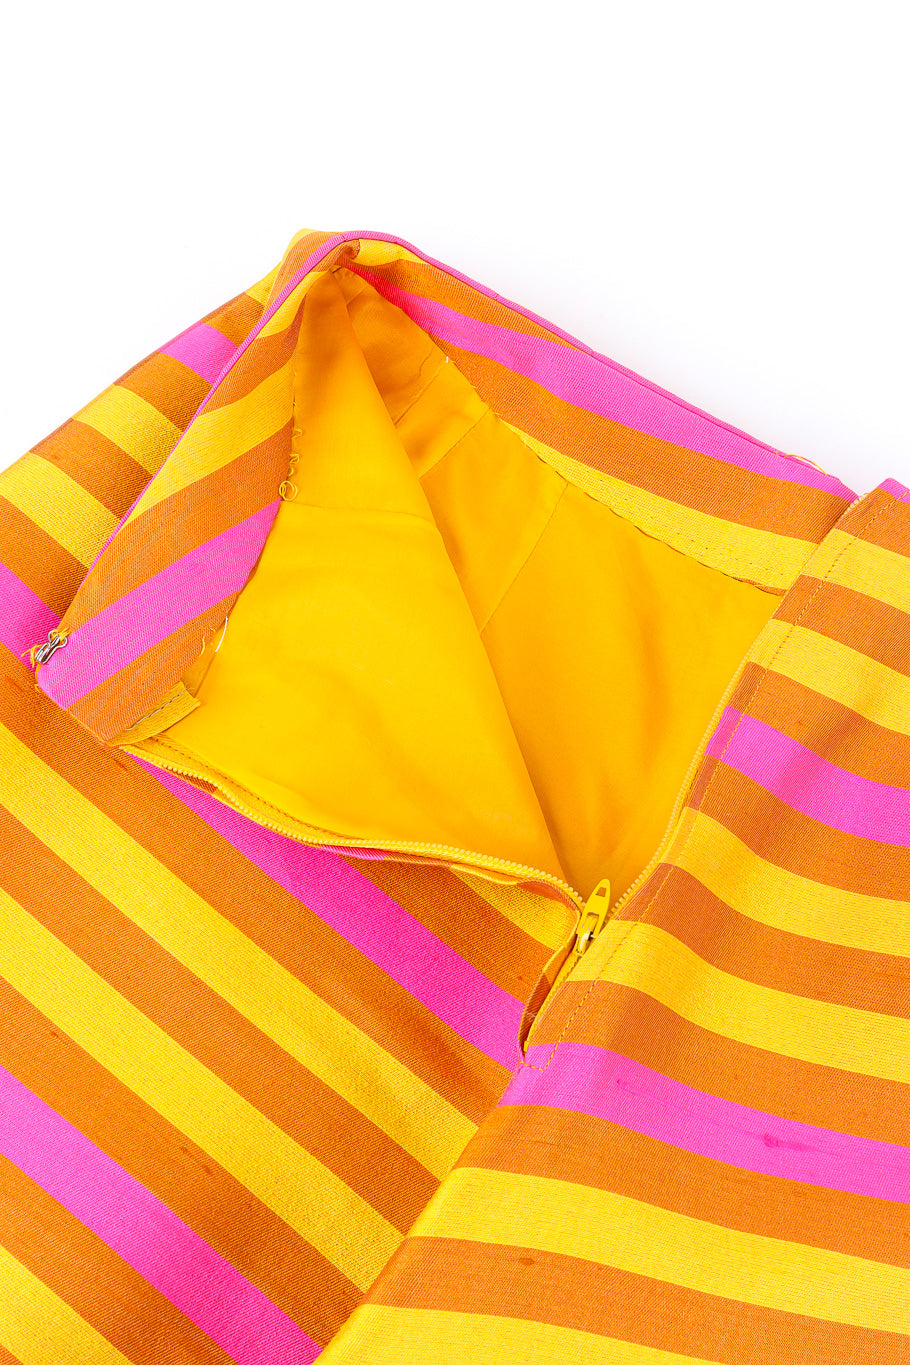 Striped blouse and pants set by Paganne flat lay pants unzipped @recessla